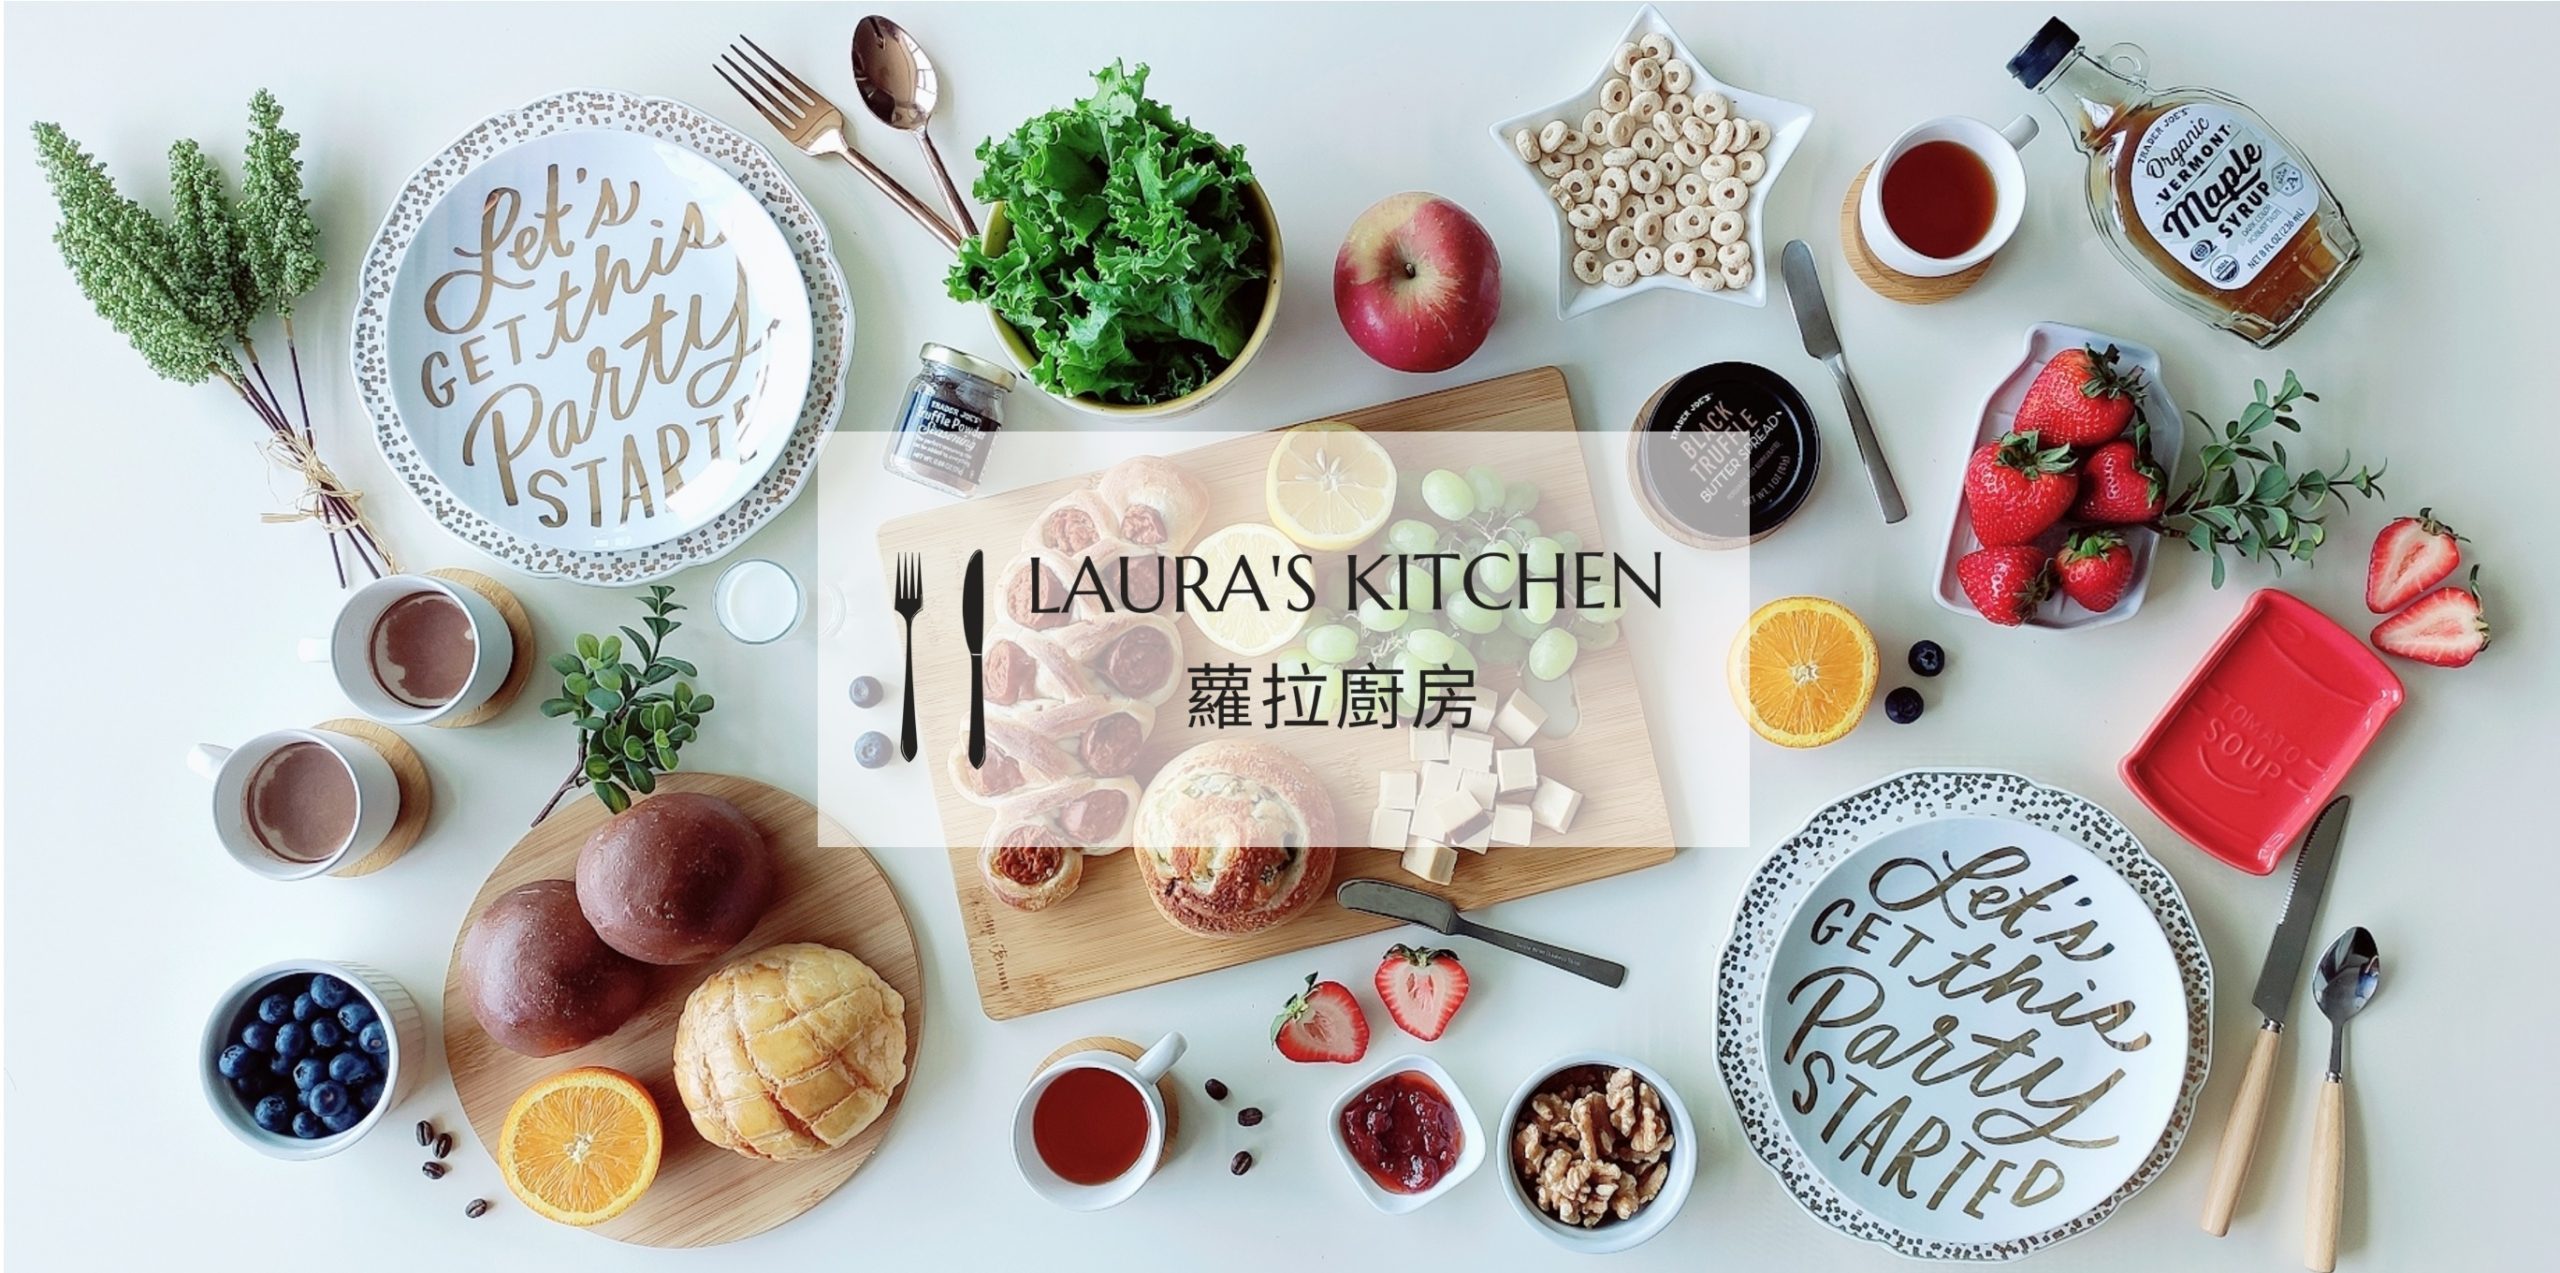 Laura's Kitchen 蘿拉廚房